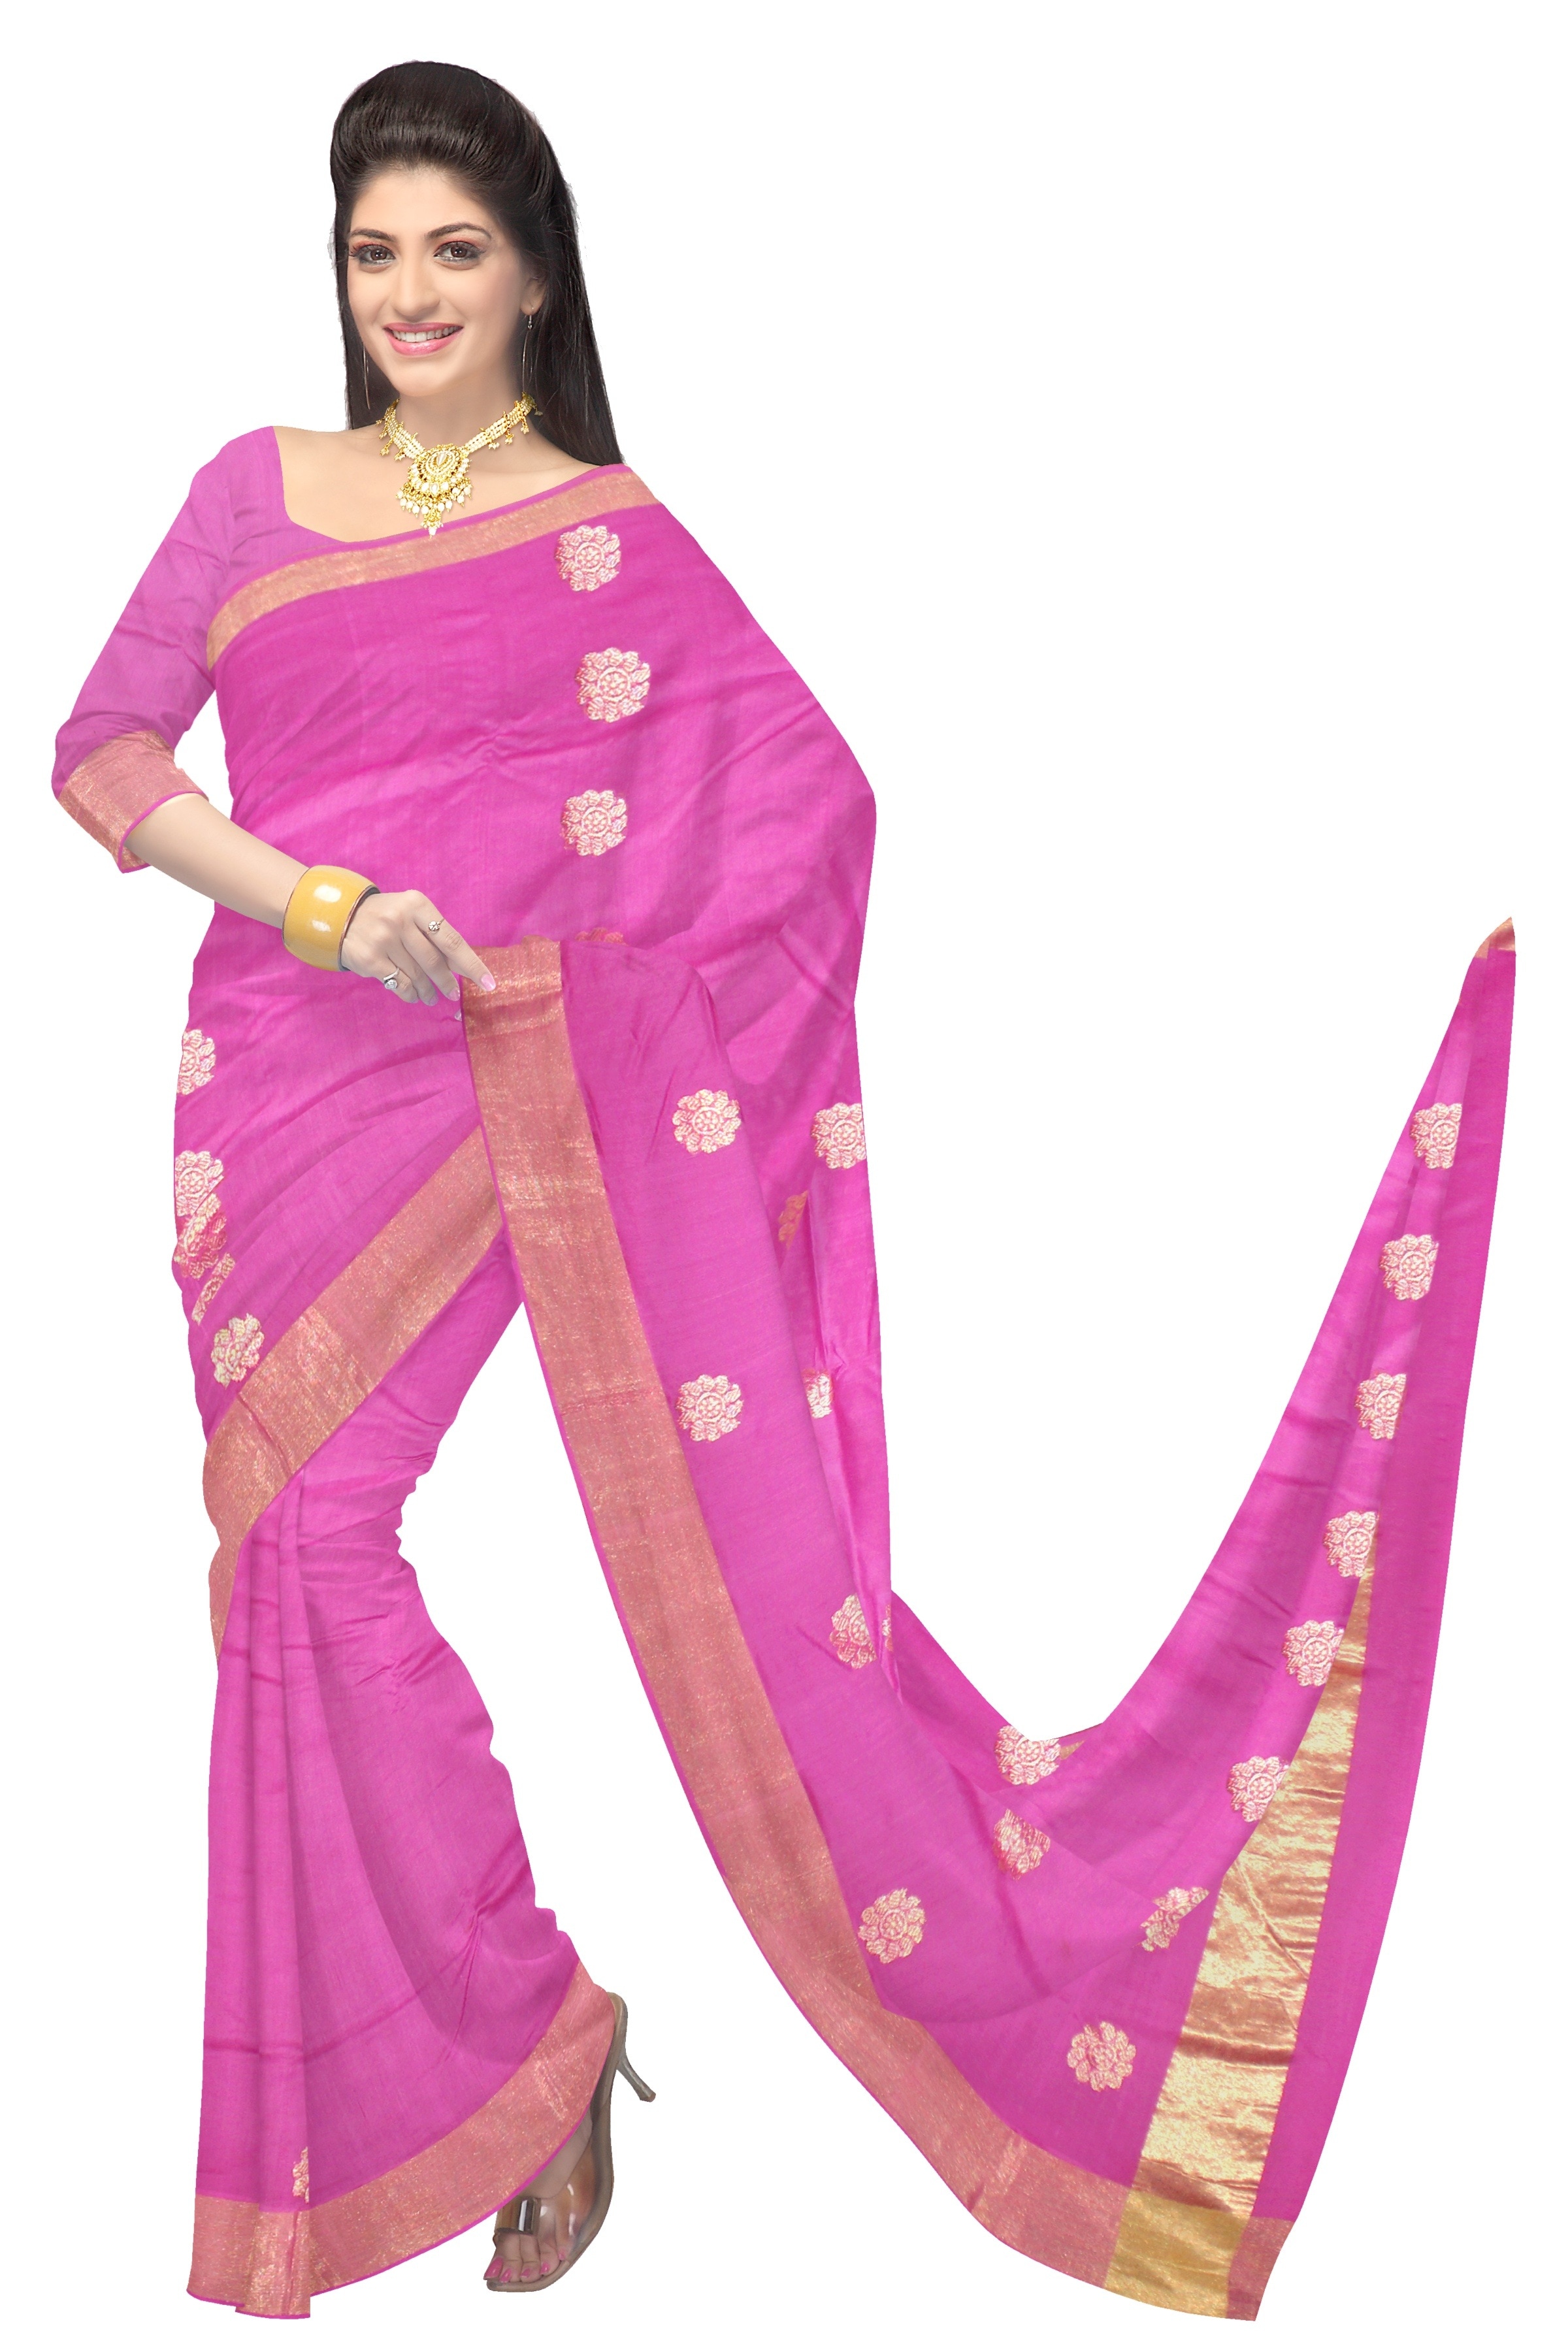 women's pink sari